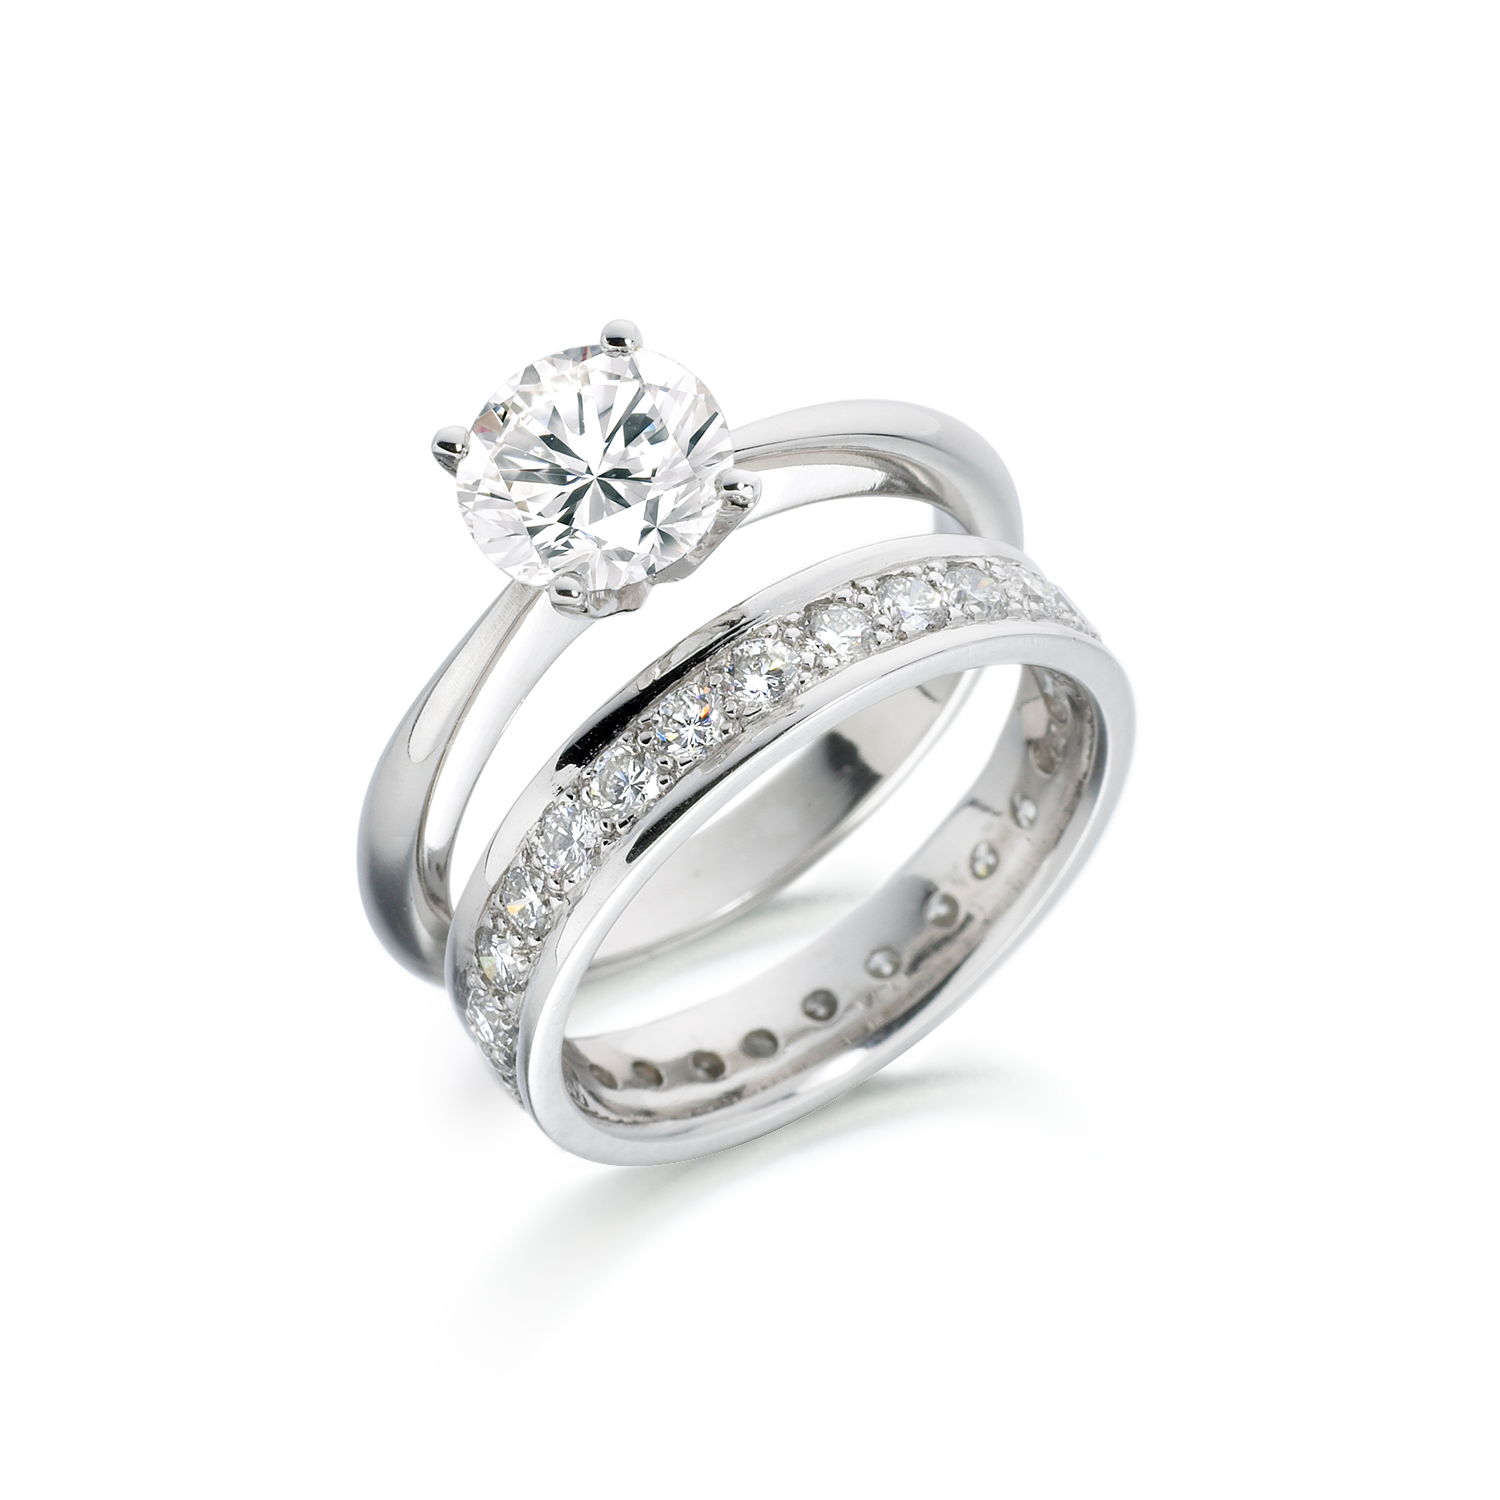 Brilliant cut diamond solitaire engagement ring